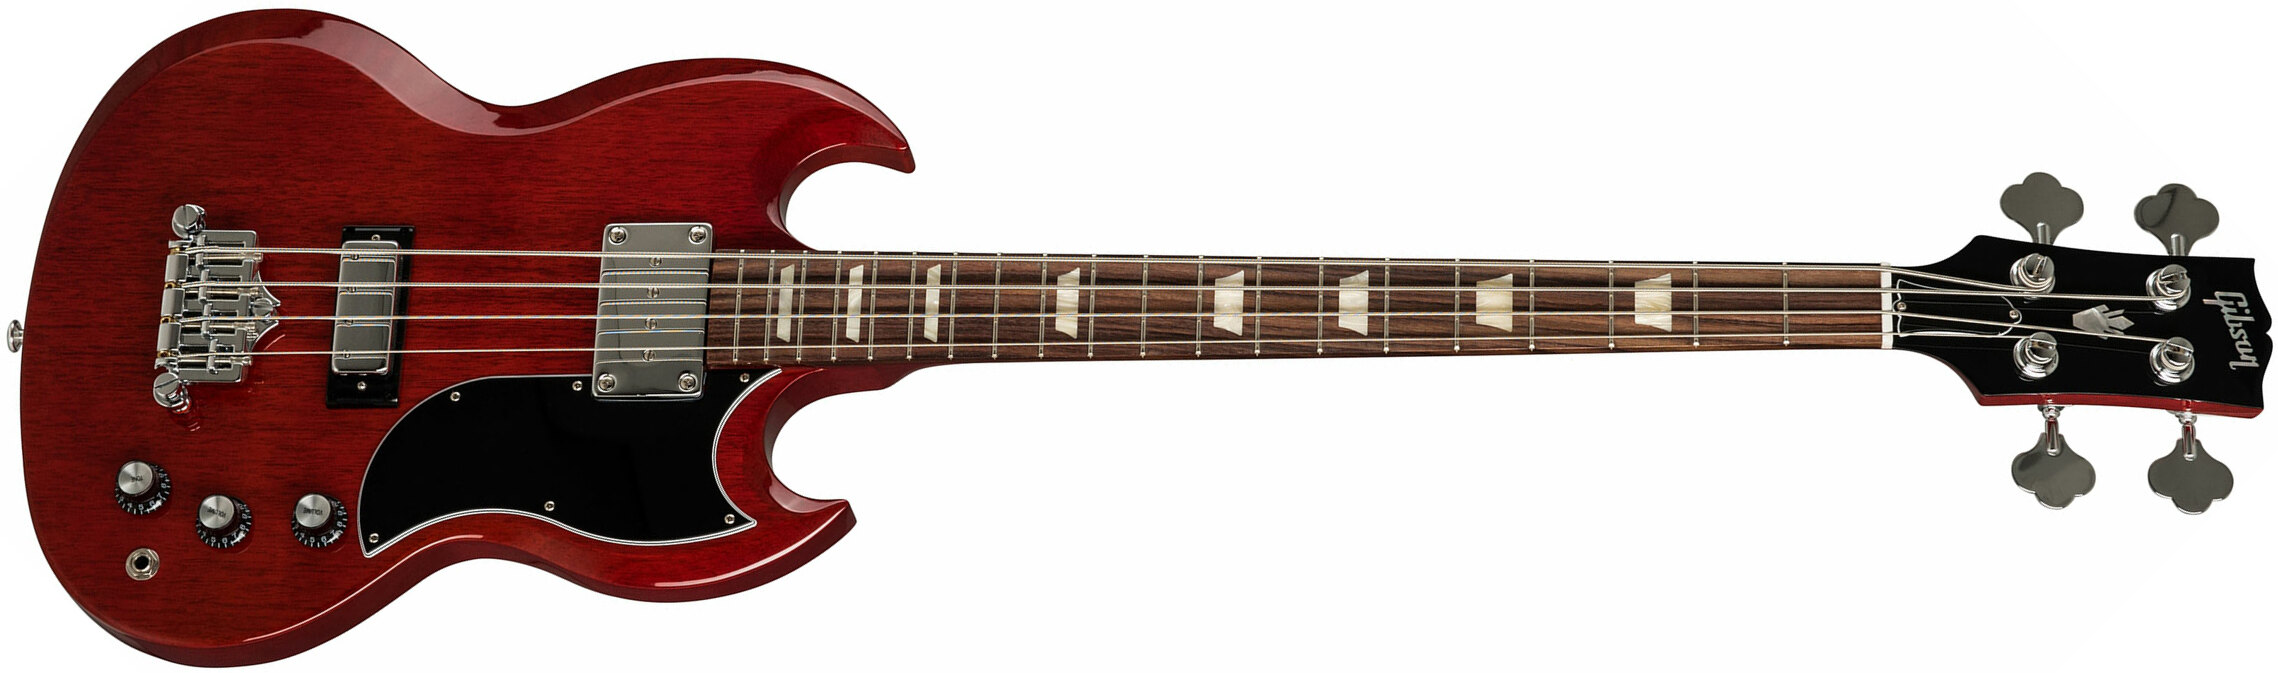 Gibson Sg Standard Bass - Heritage Cherry - Solid body elektrische bas - Main picture